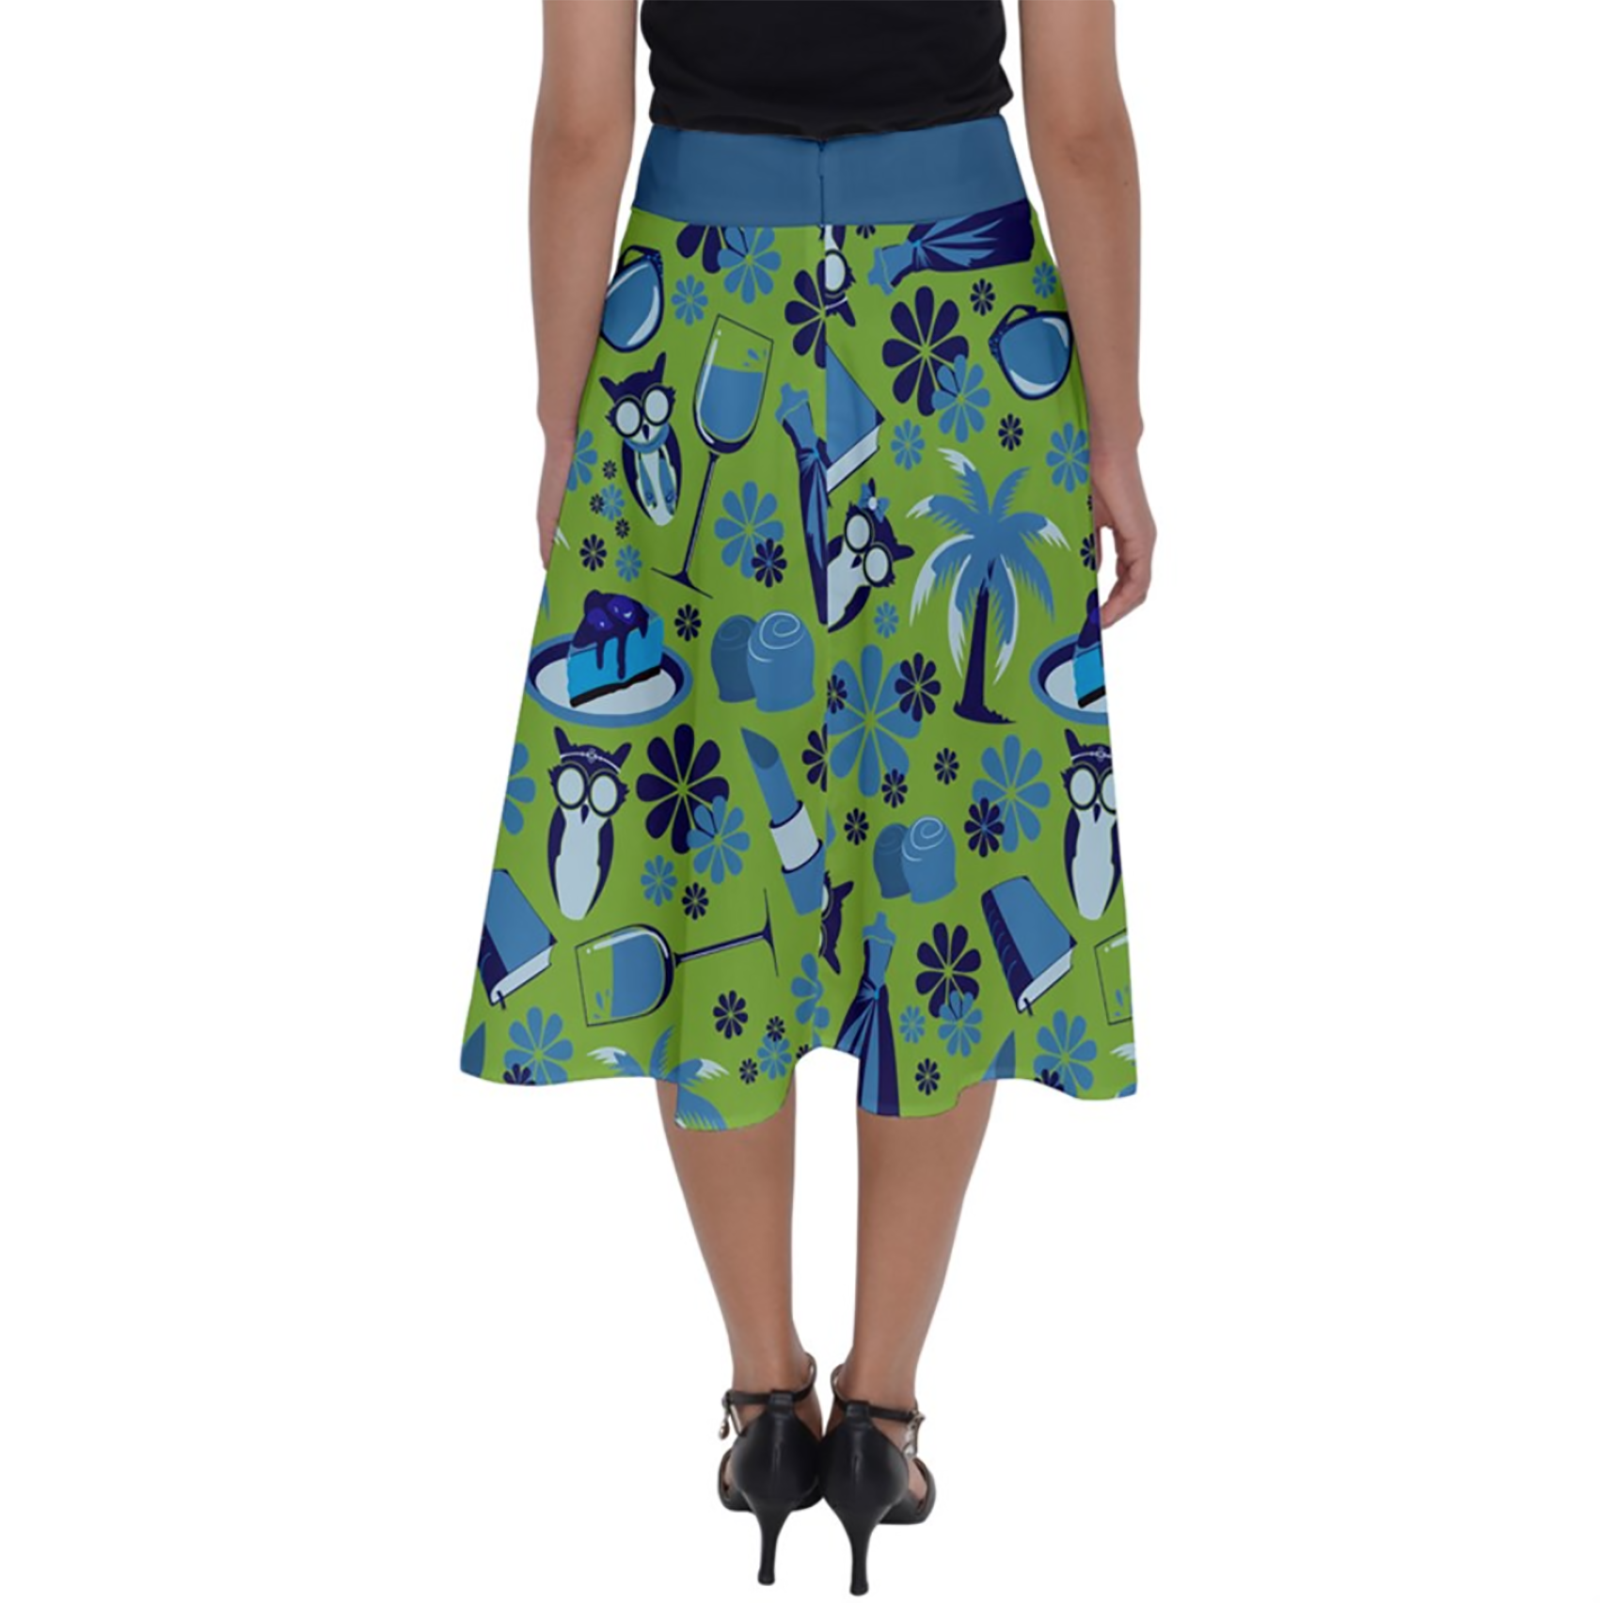 Self-Care Perfect Length Midi Skirt (Green)